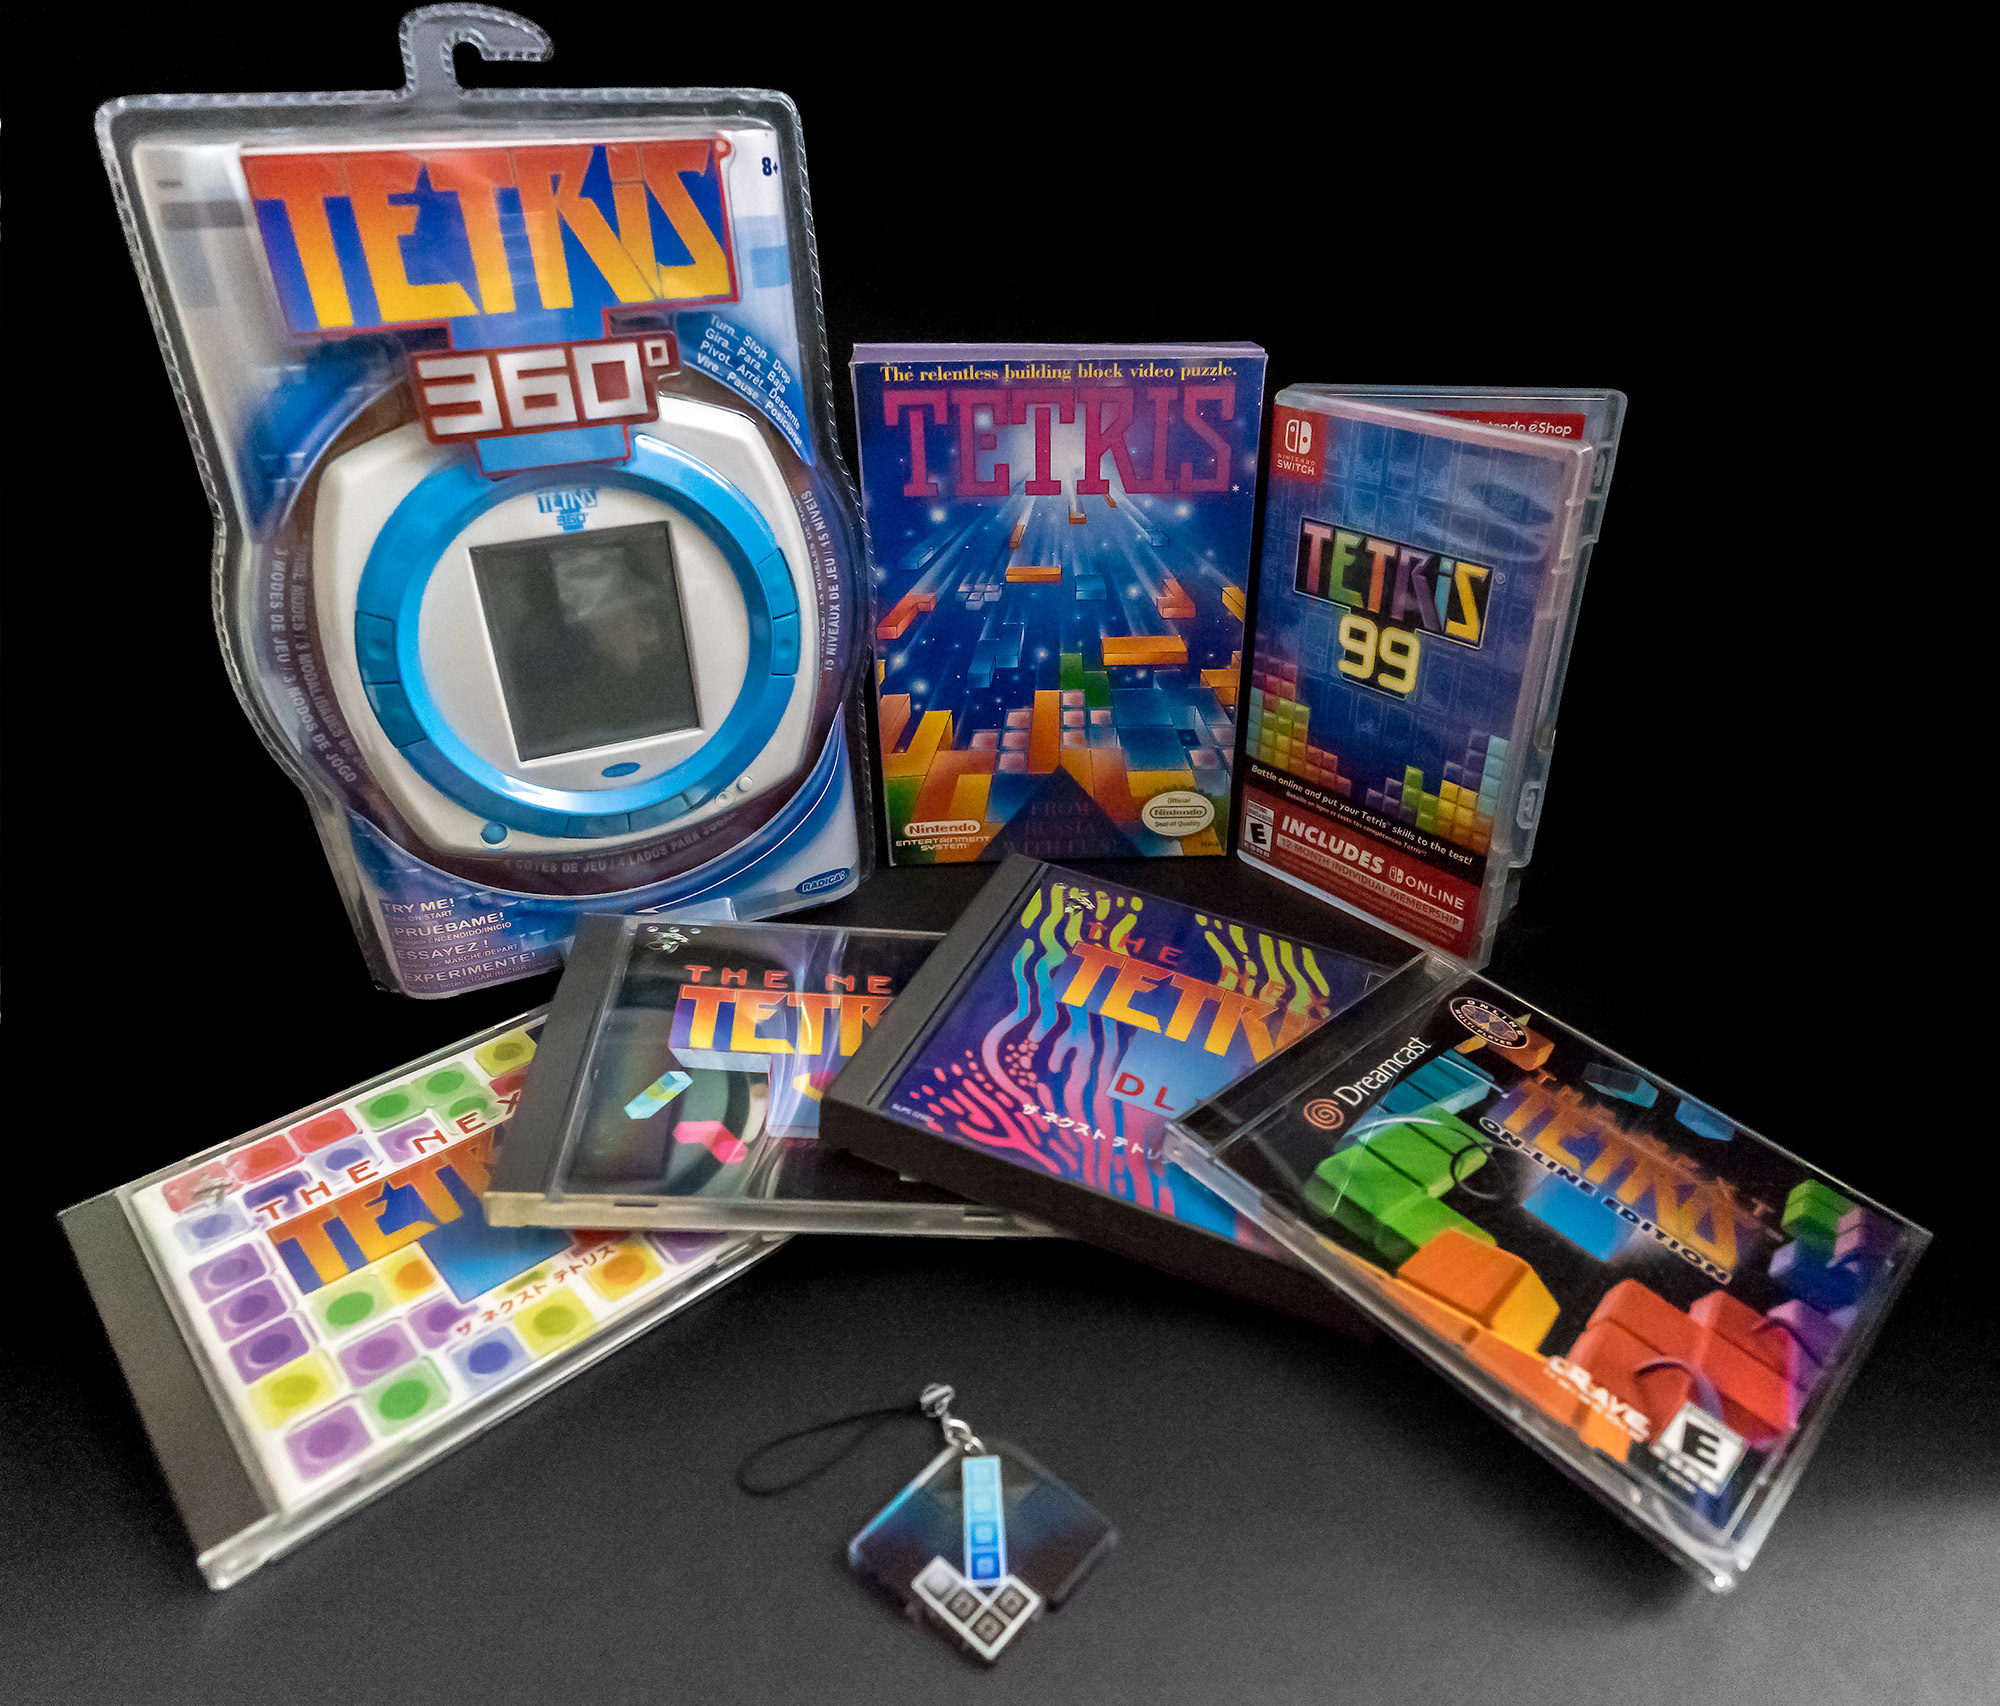 Tetris collection update, The Next Tetris!